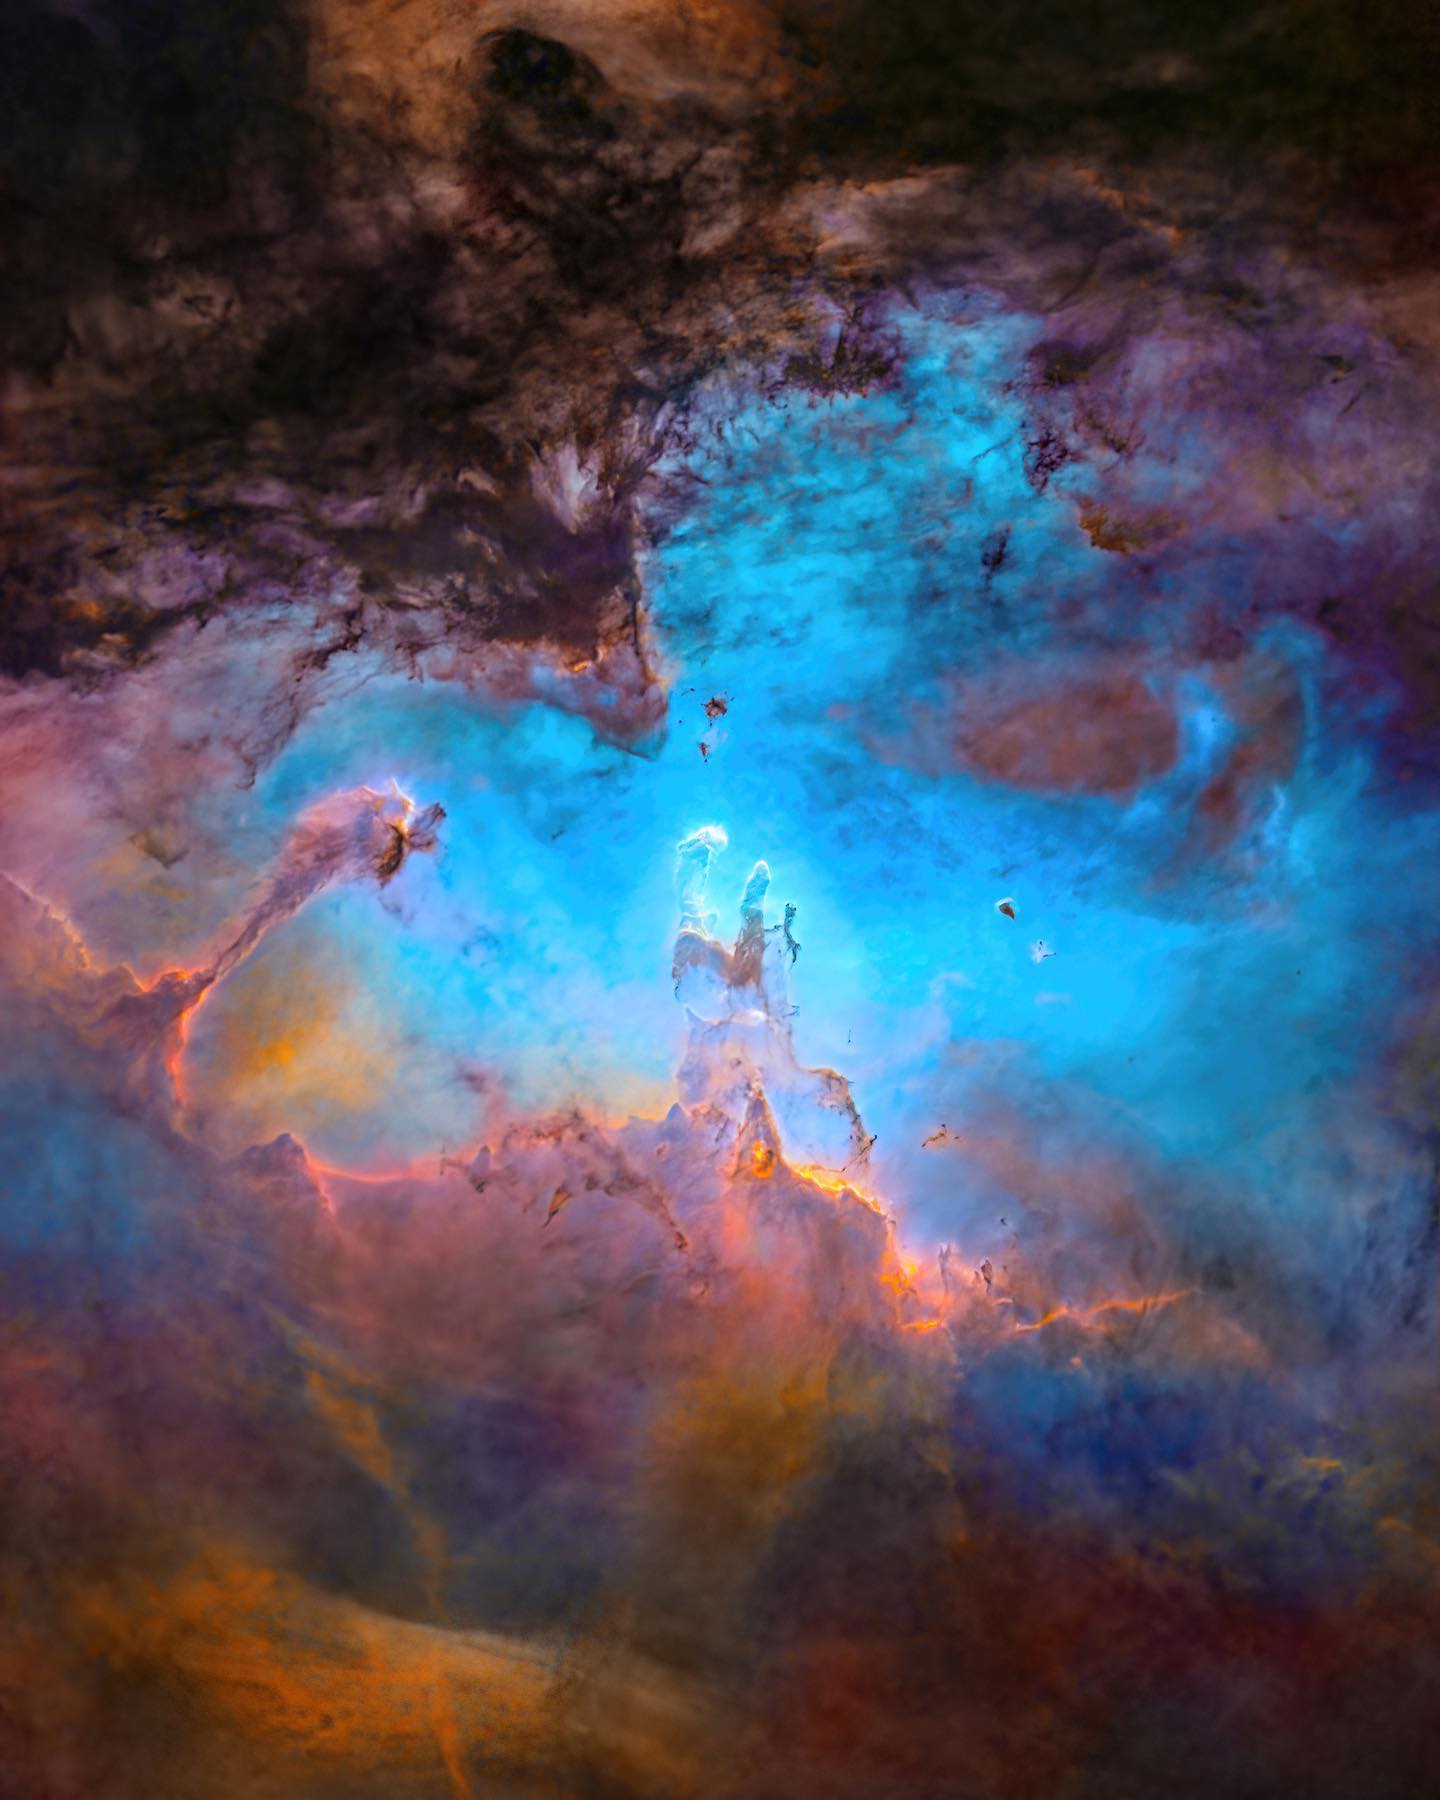 鹰状星云,距地球7000光年,来自摄影师andrew mccarthy